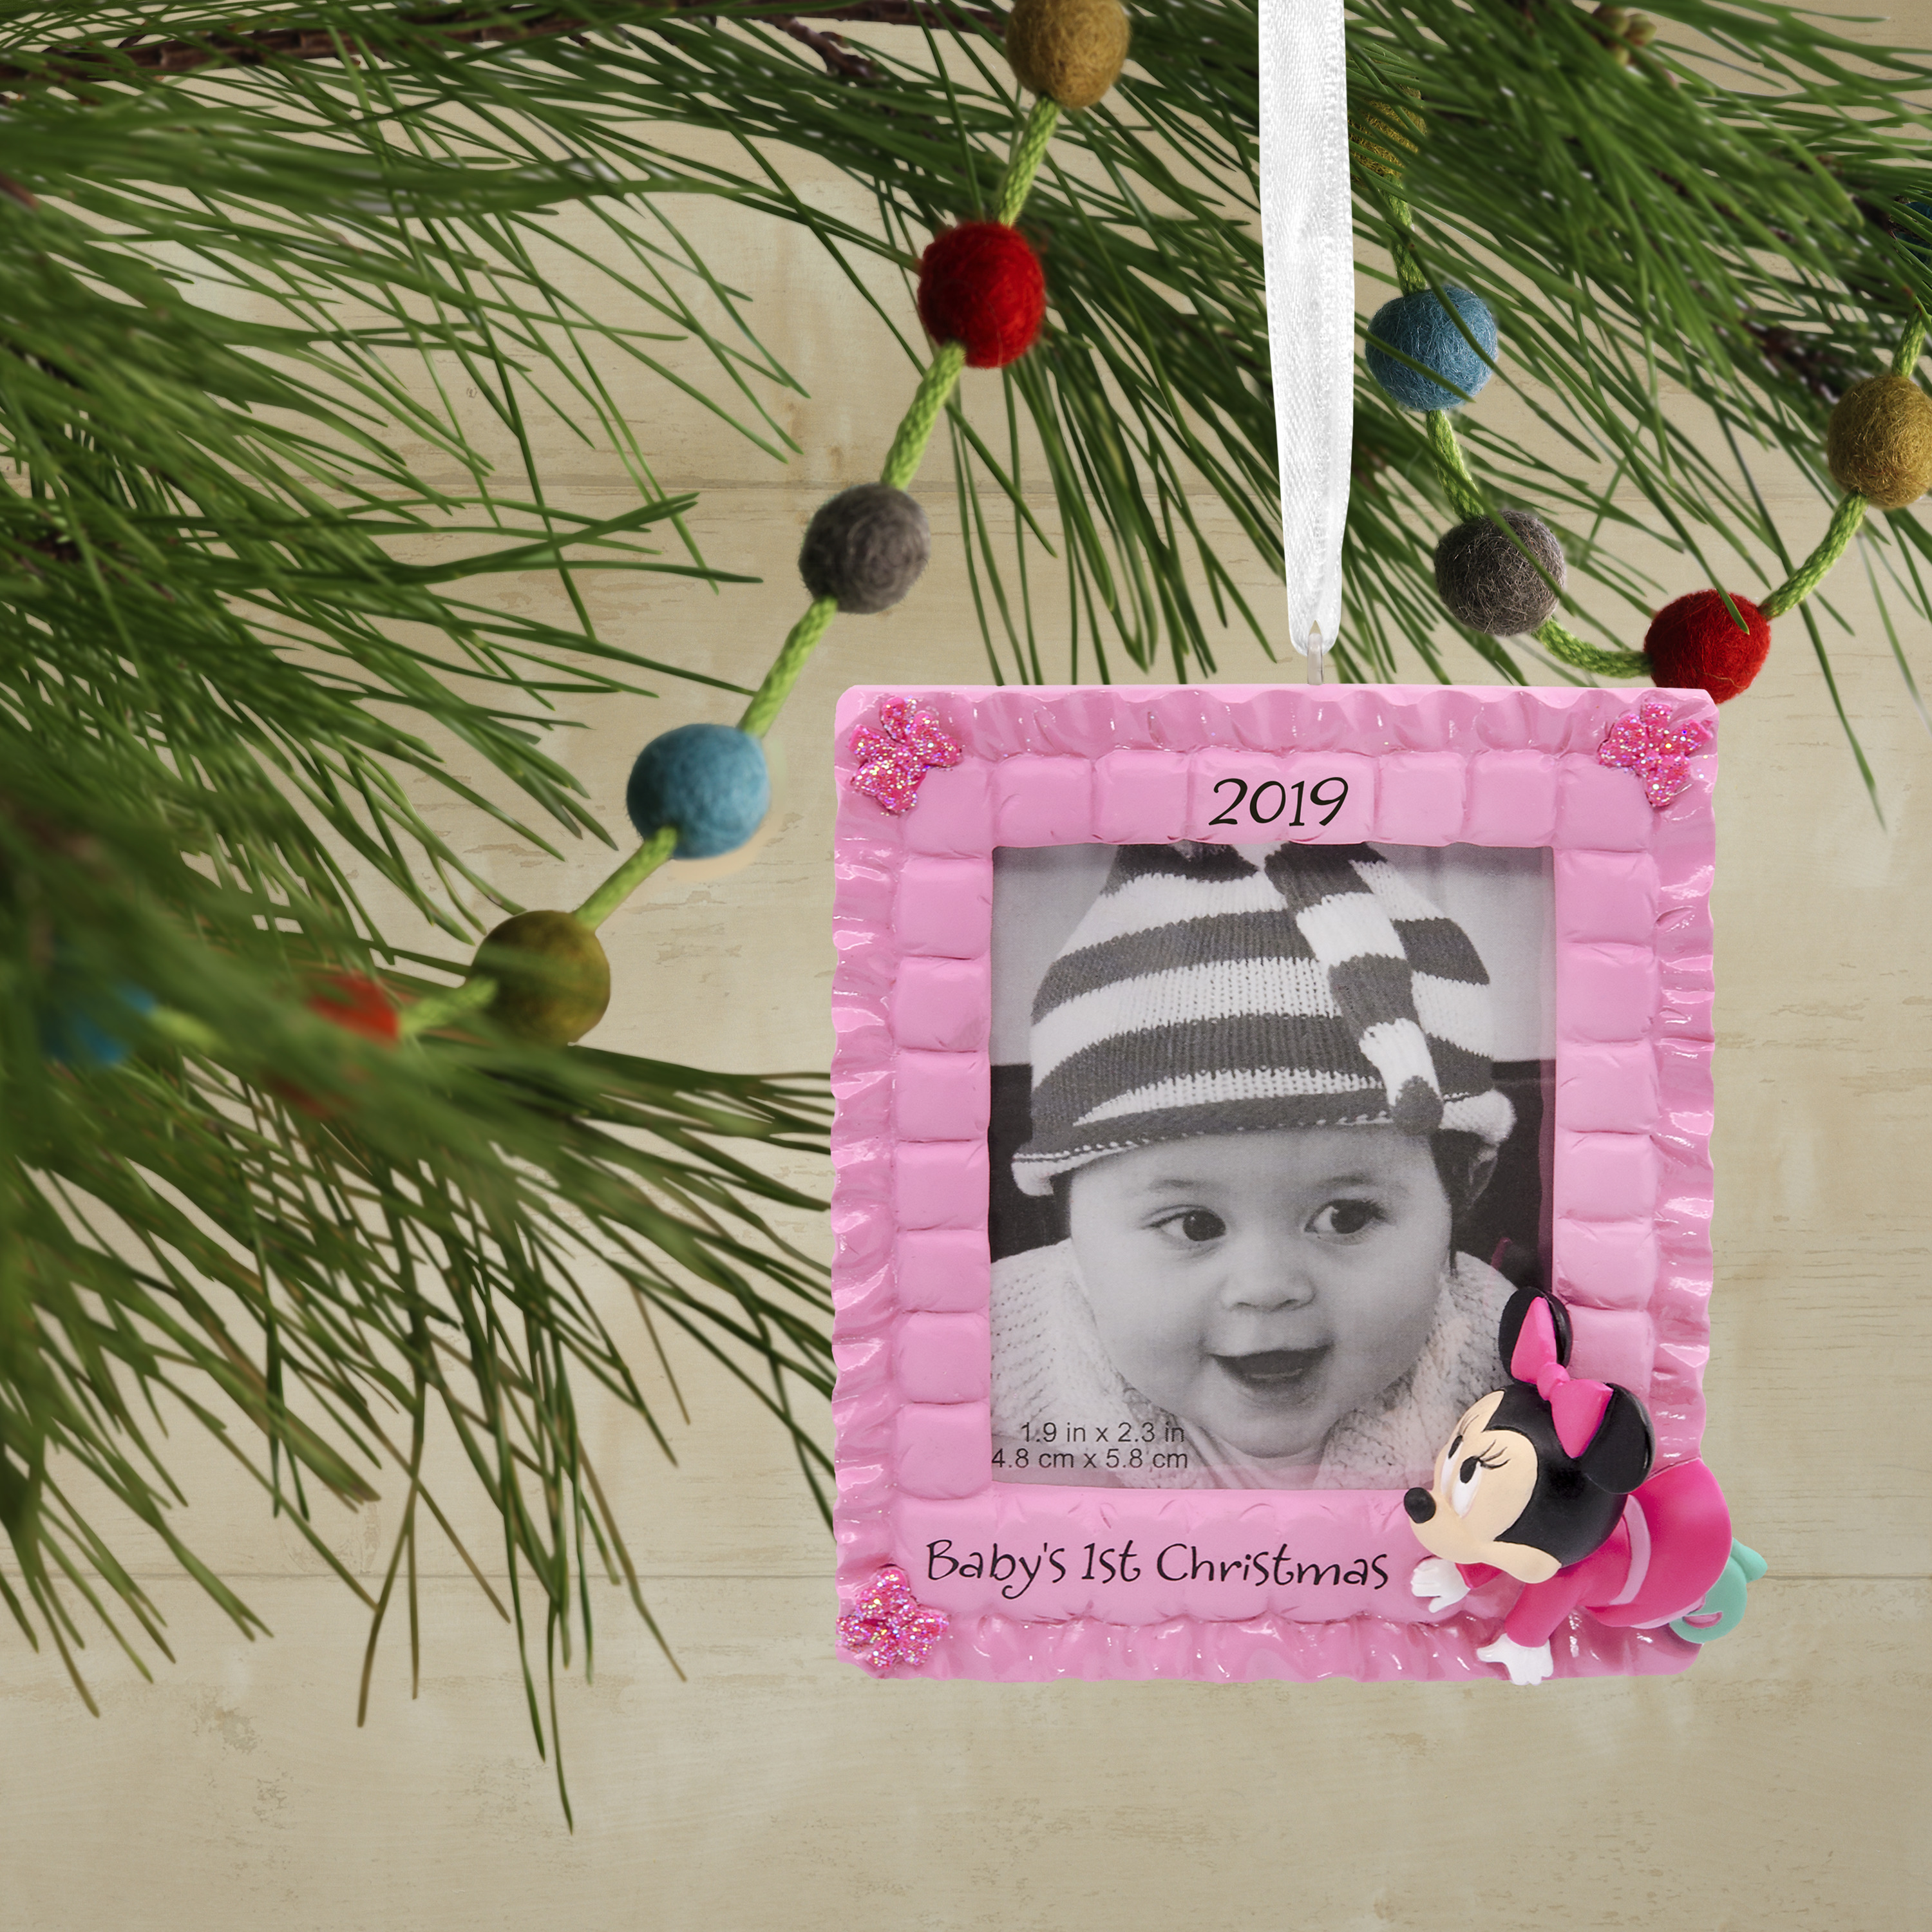 Hallmark Disney's 2019 Minnie Mouse Baby's 1st Christmas Christmas Ornaments - image 5 of 6